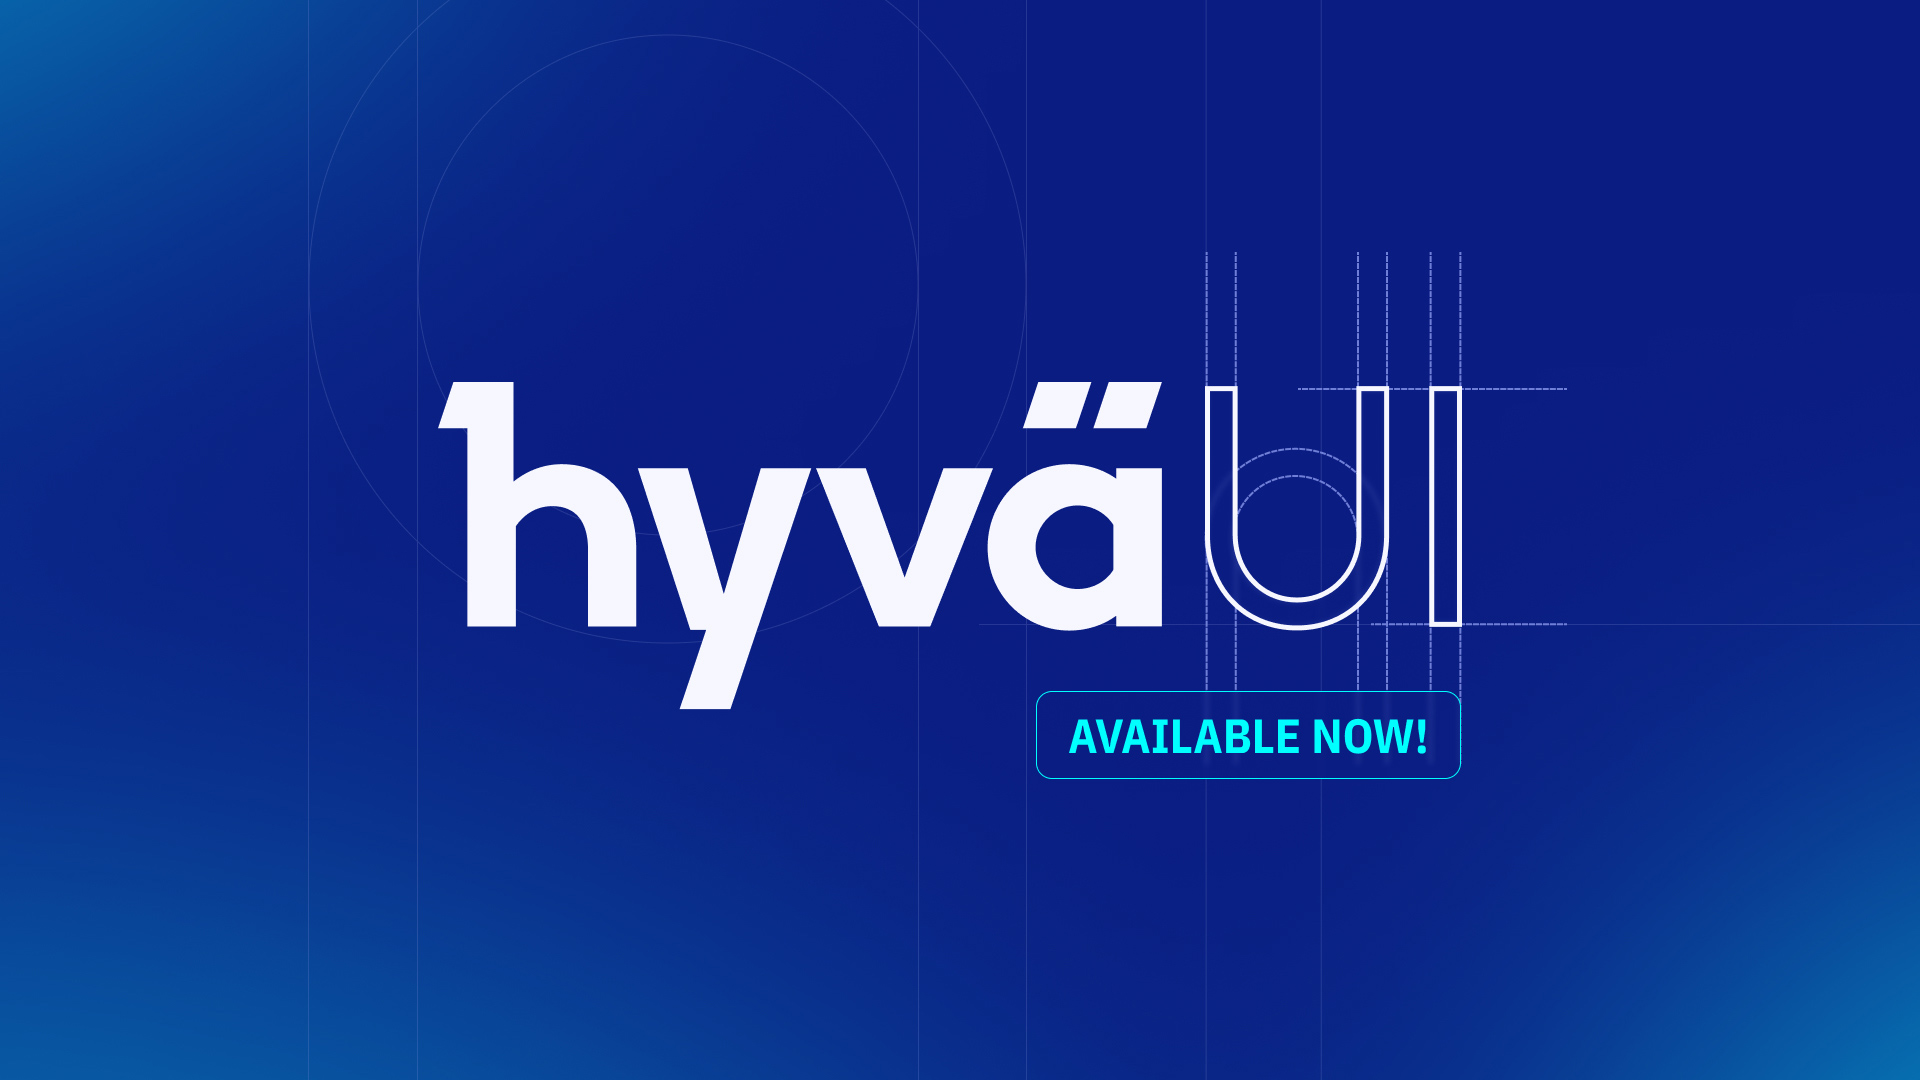 Hyvä UI is now available!